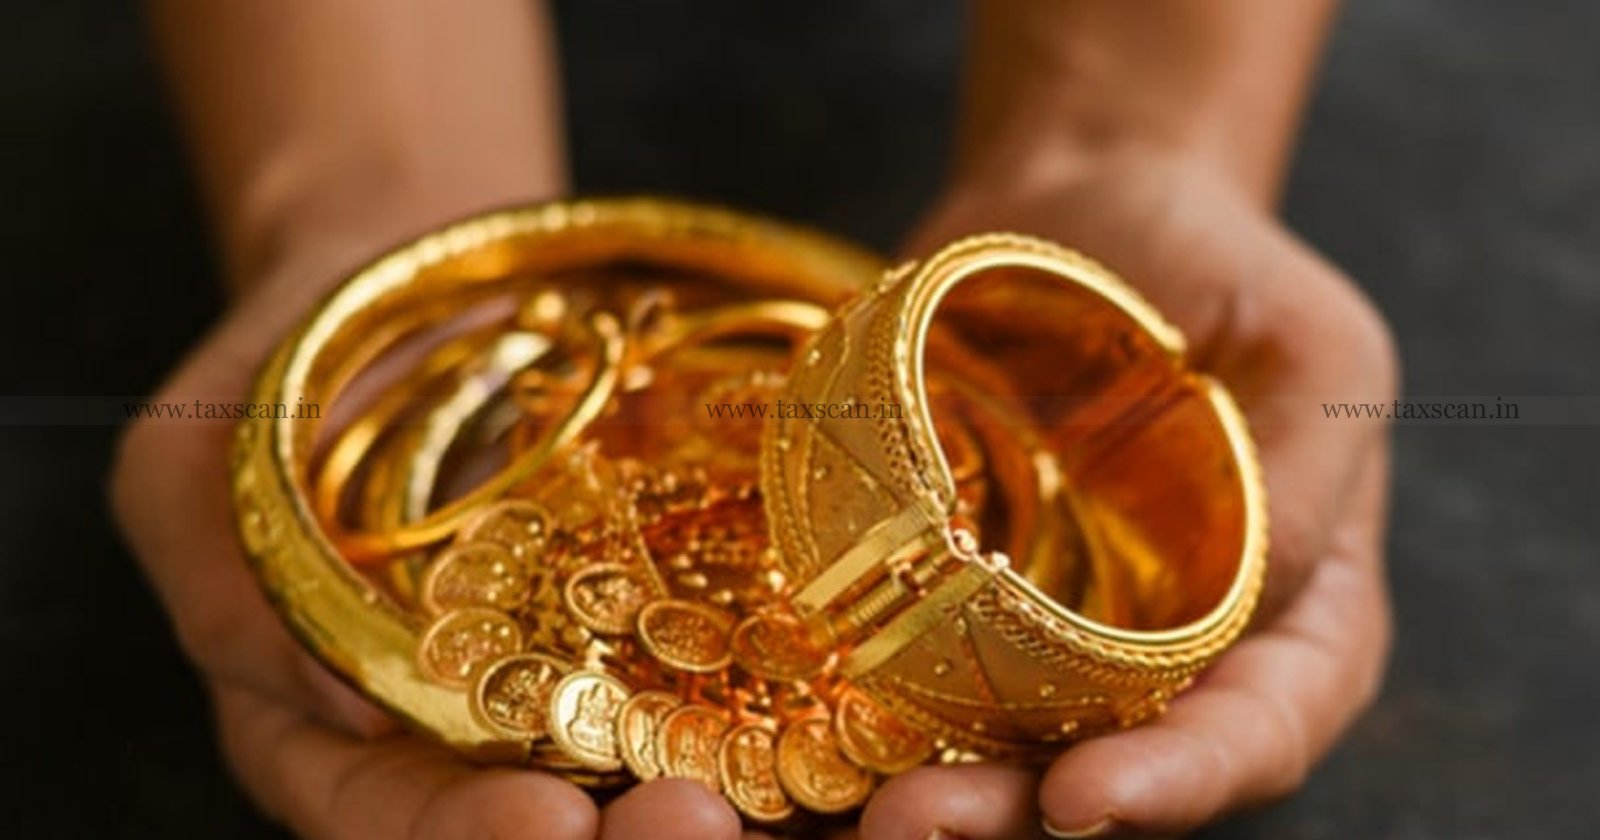 Sale - Proceeds - of - Gold - Jewellery - ITAT- Capital - Gain - Exemption - TAXSCAN